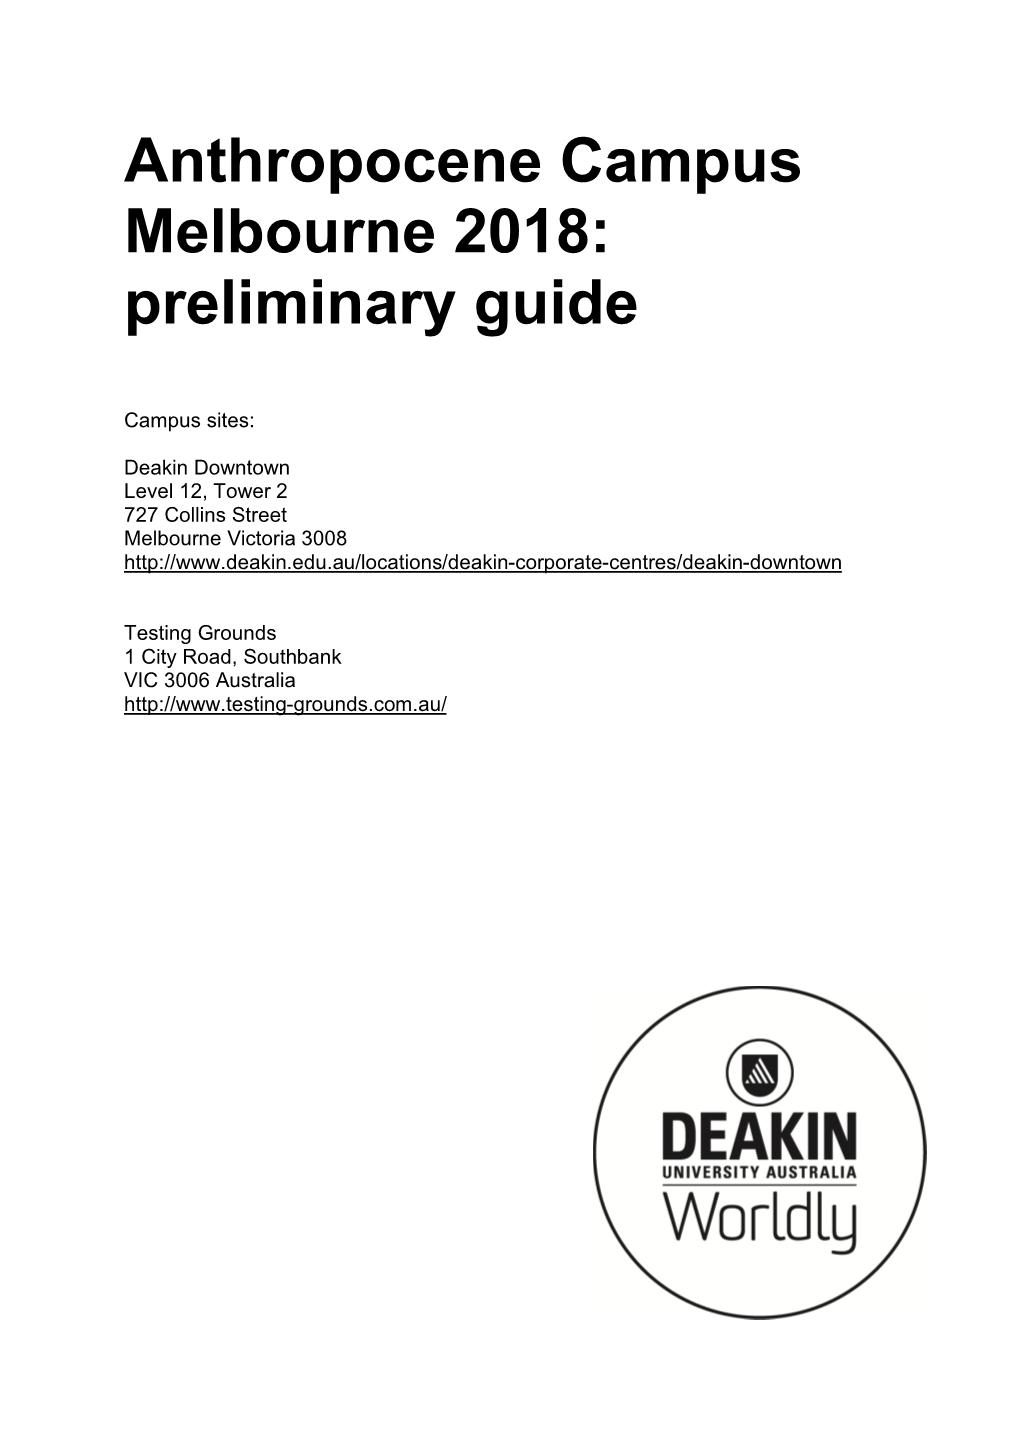 Anthropocene Campus Melbourne 2018: Preliminary Guide